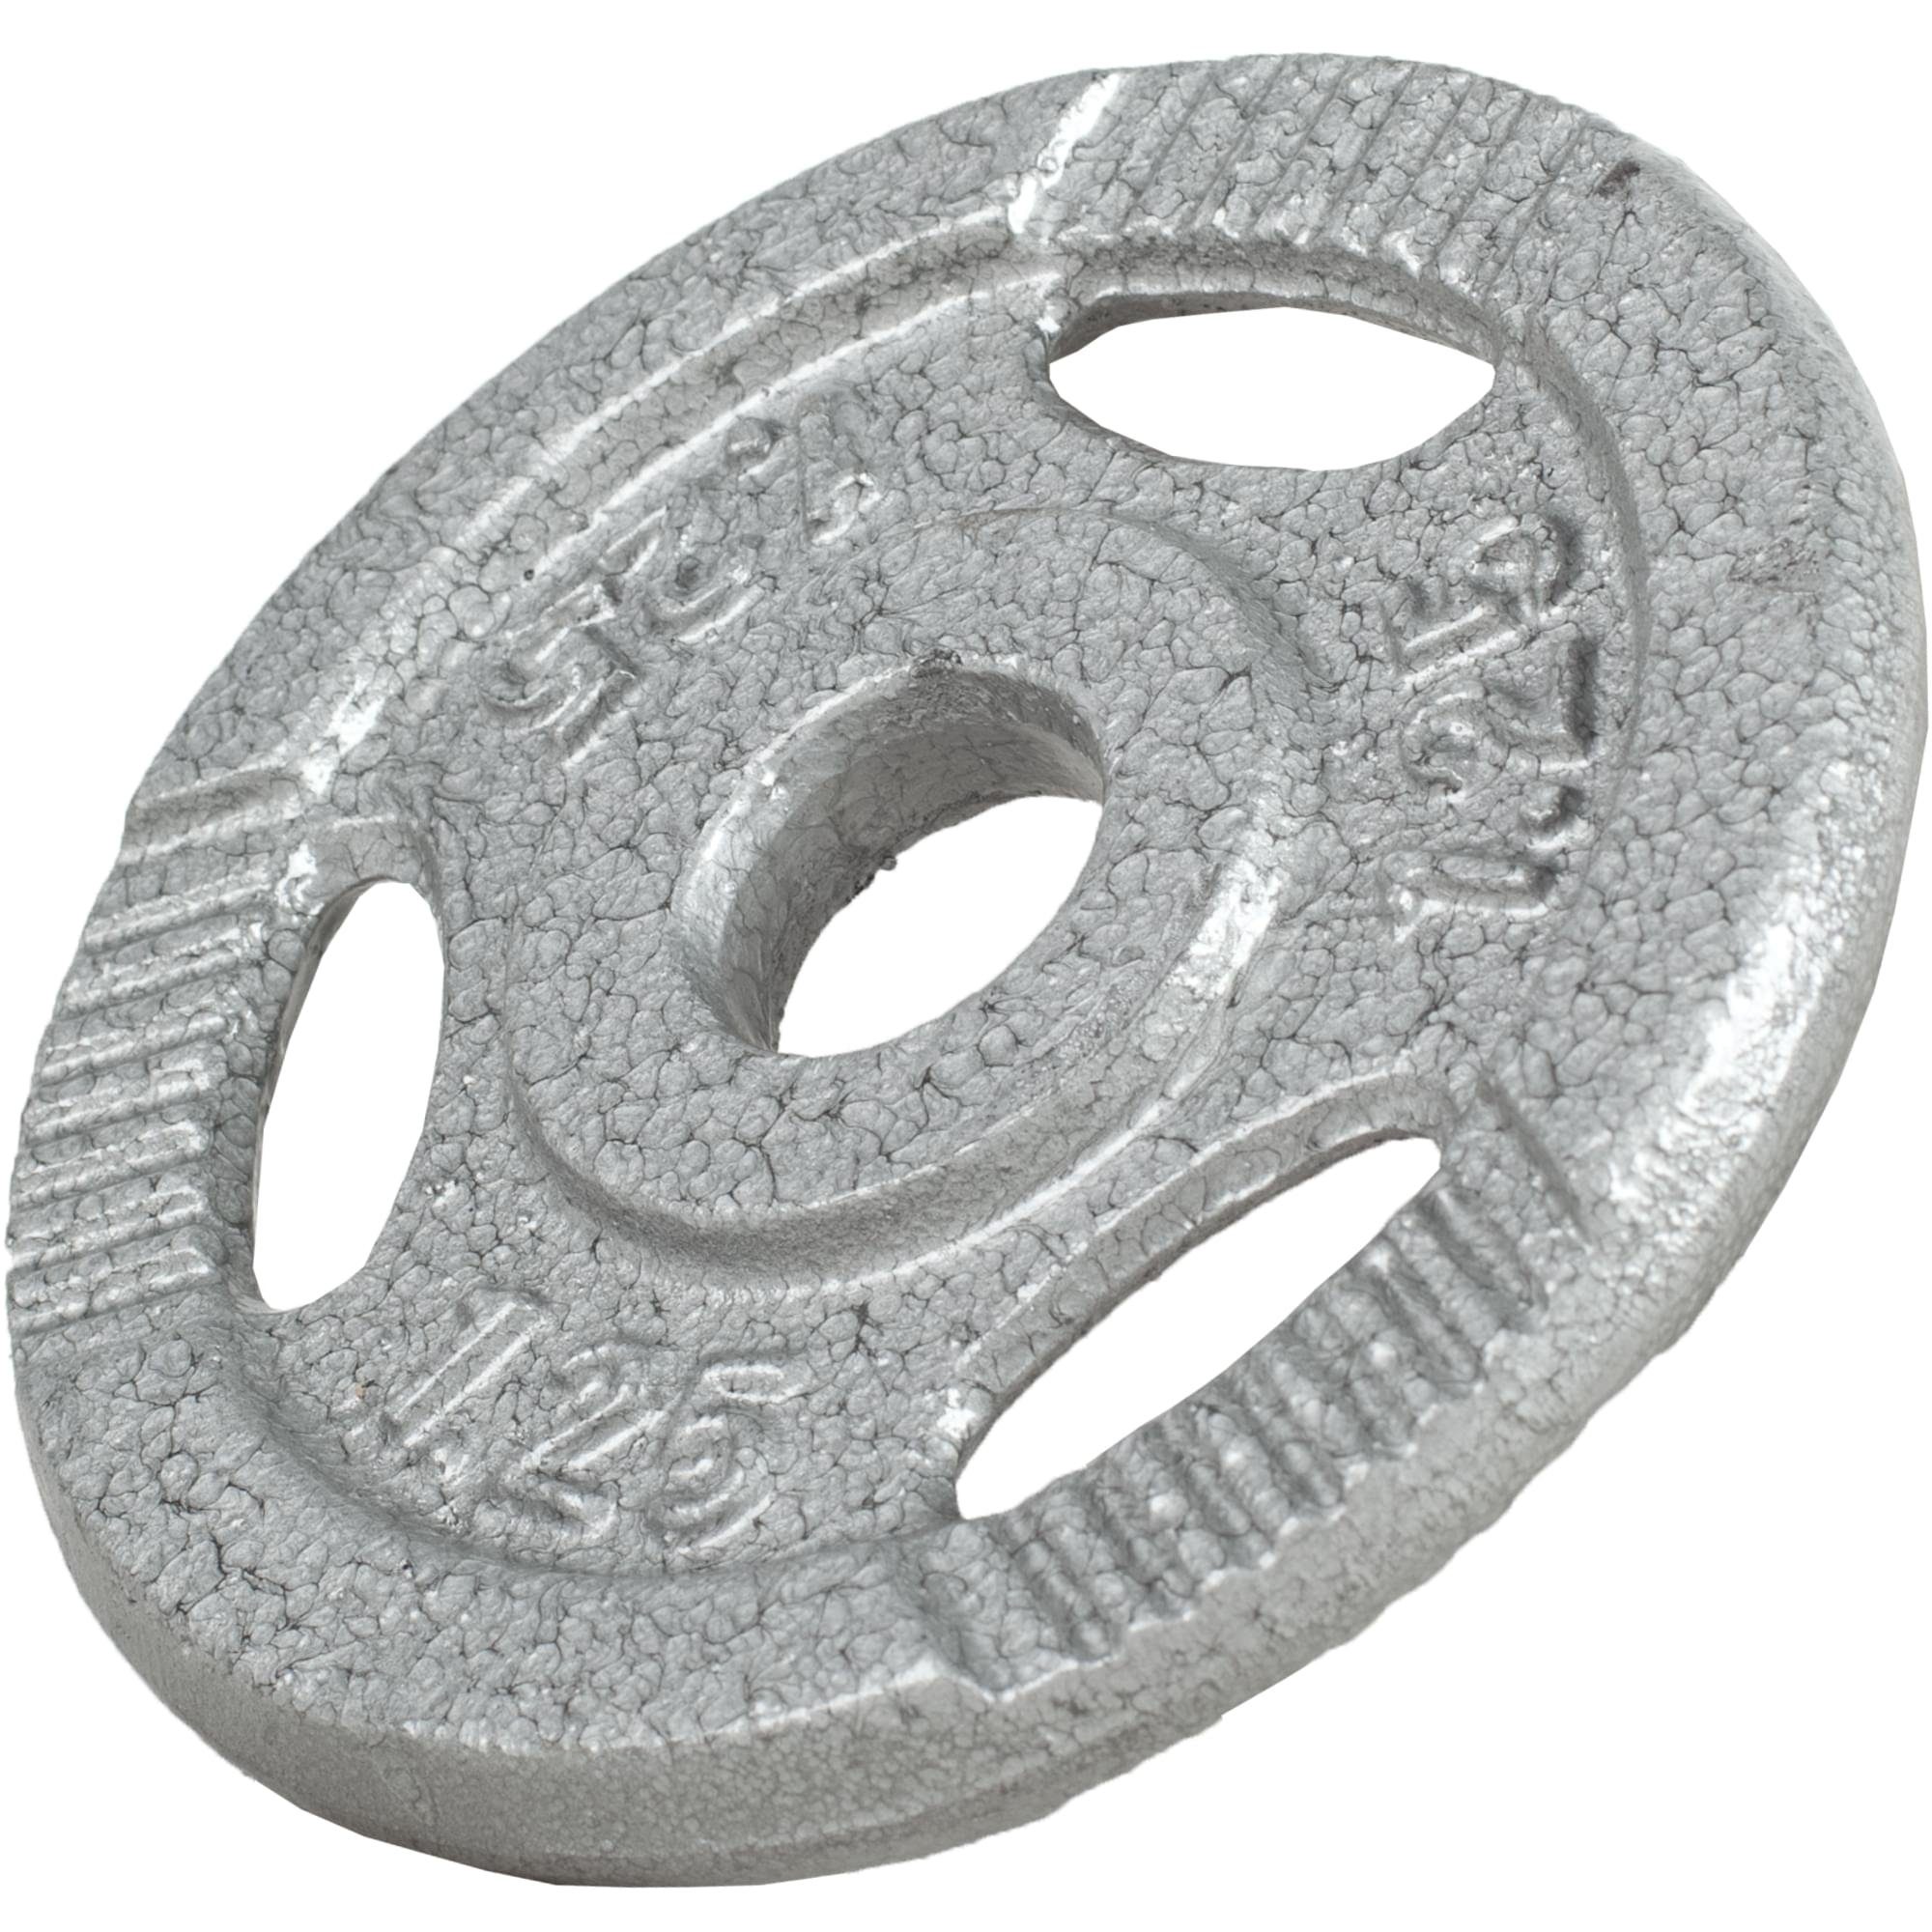 Hanteln Silber Tri-Grip, (30mm) Einzeln/Set, Gusseisen, 30/50mm, GORILLA Hantelscheiben Set SPORTS Silber/Schwarz,